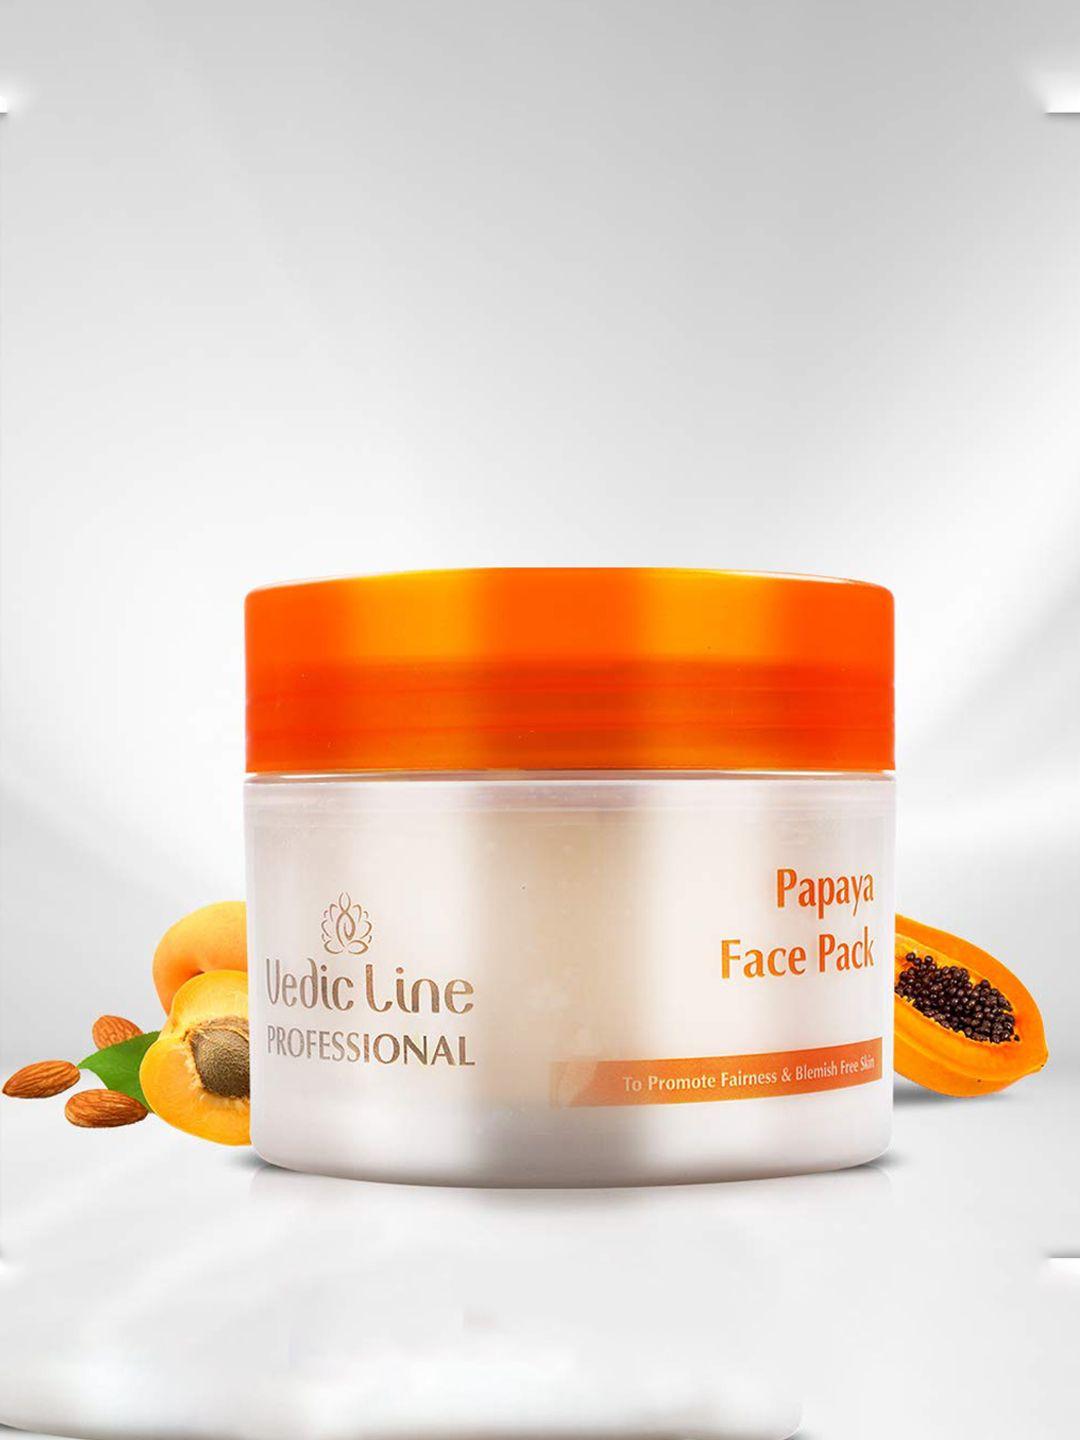 vedicline professional papaya face pack reduce pigmentation - 500ml